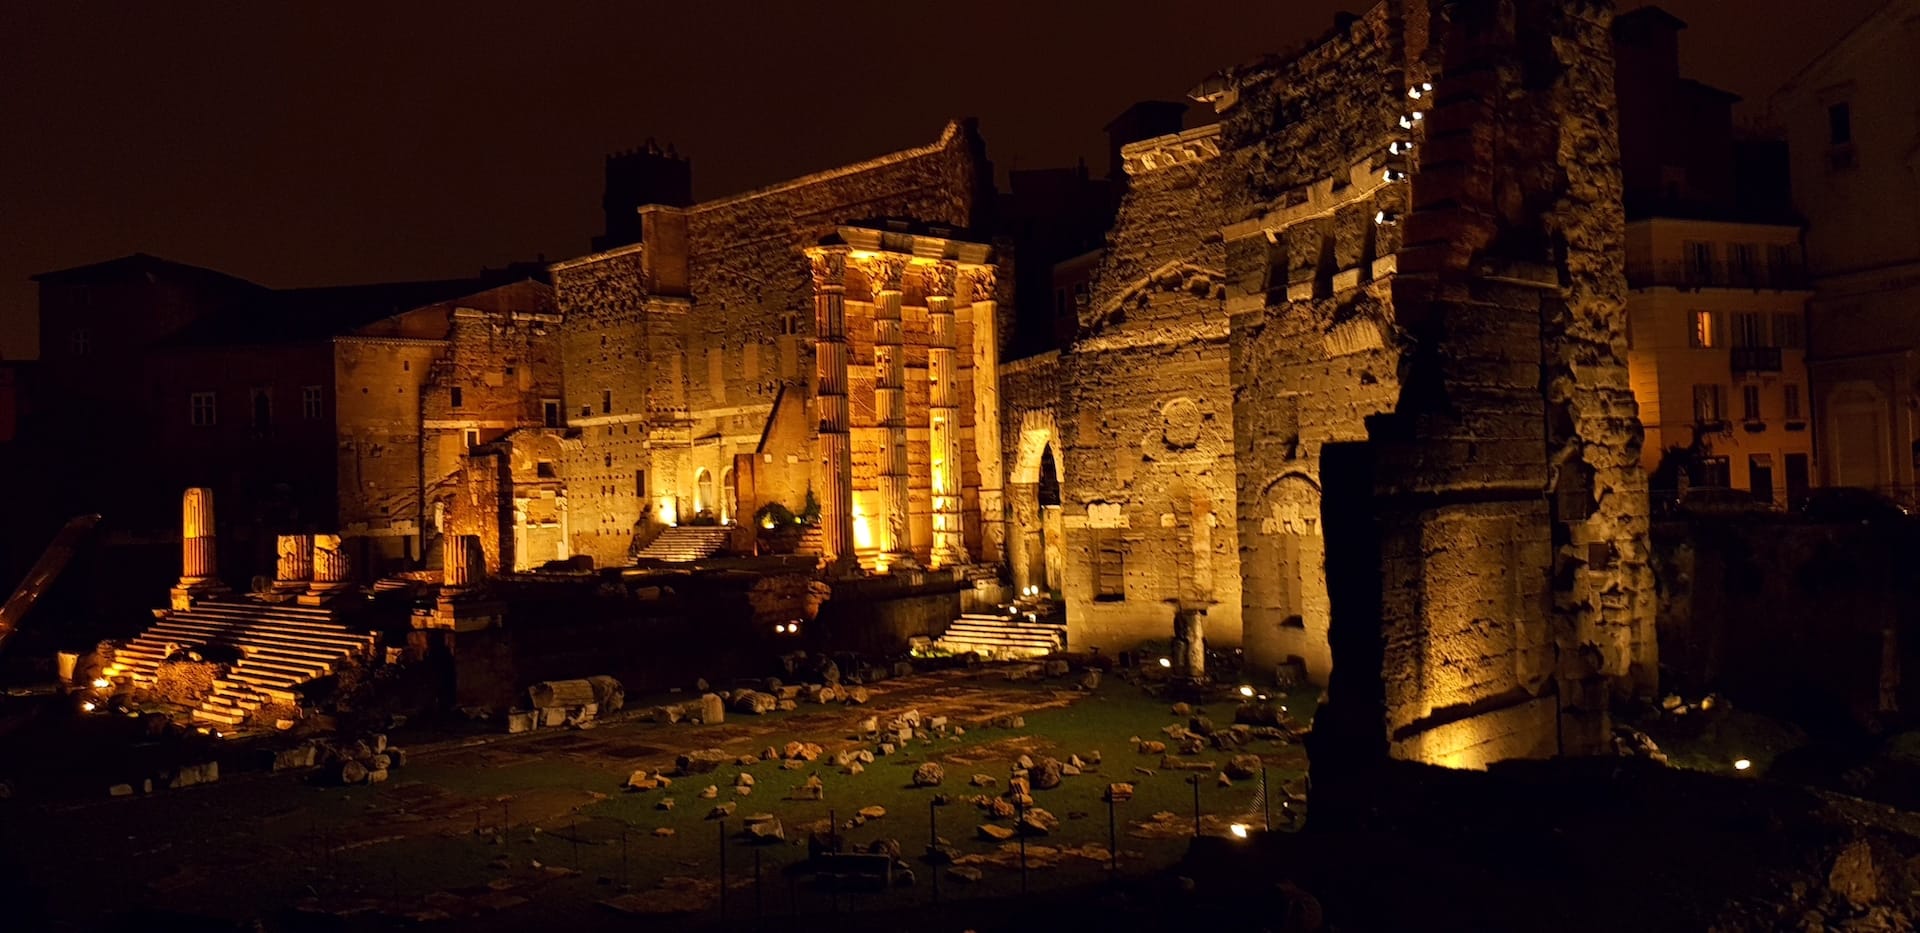 A Night View of Ancient Roman Ruins, Copyright: Christina Athanasiou